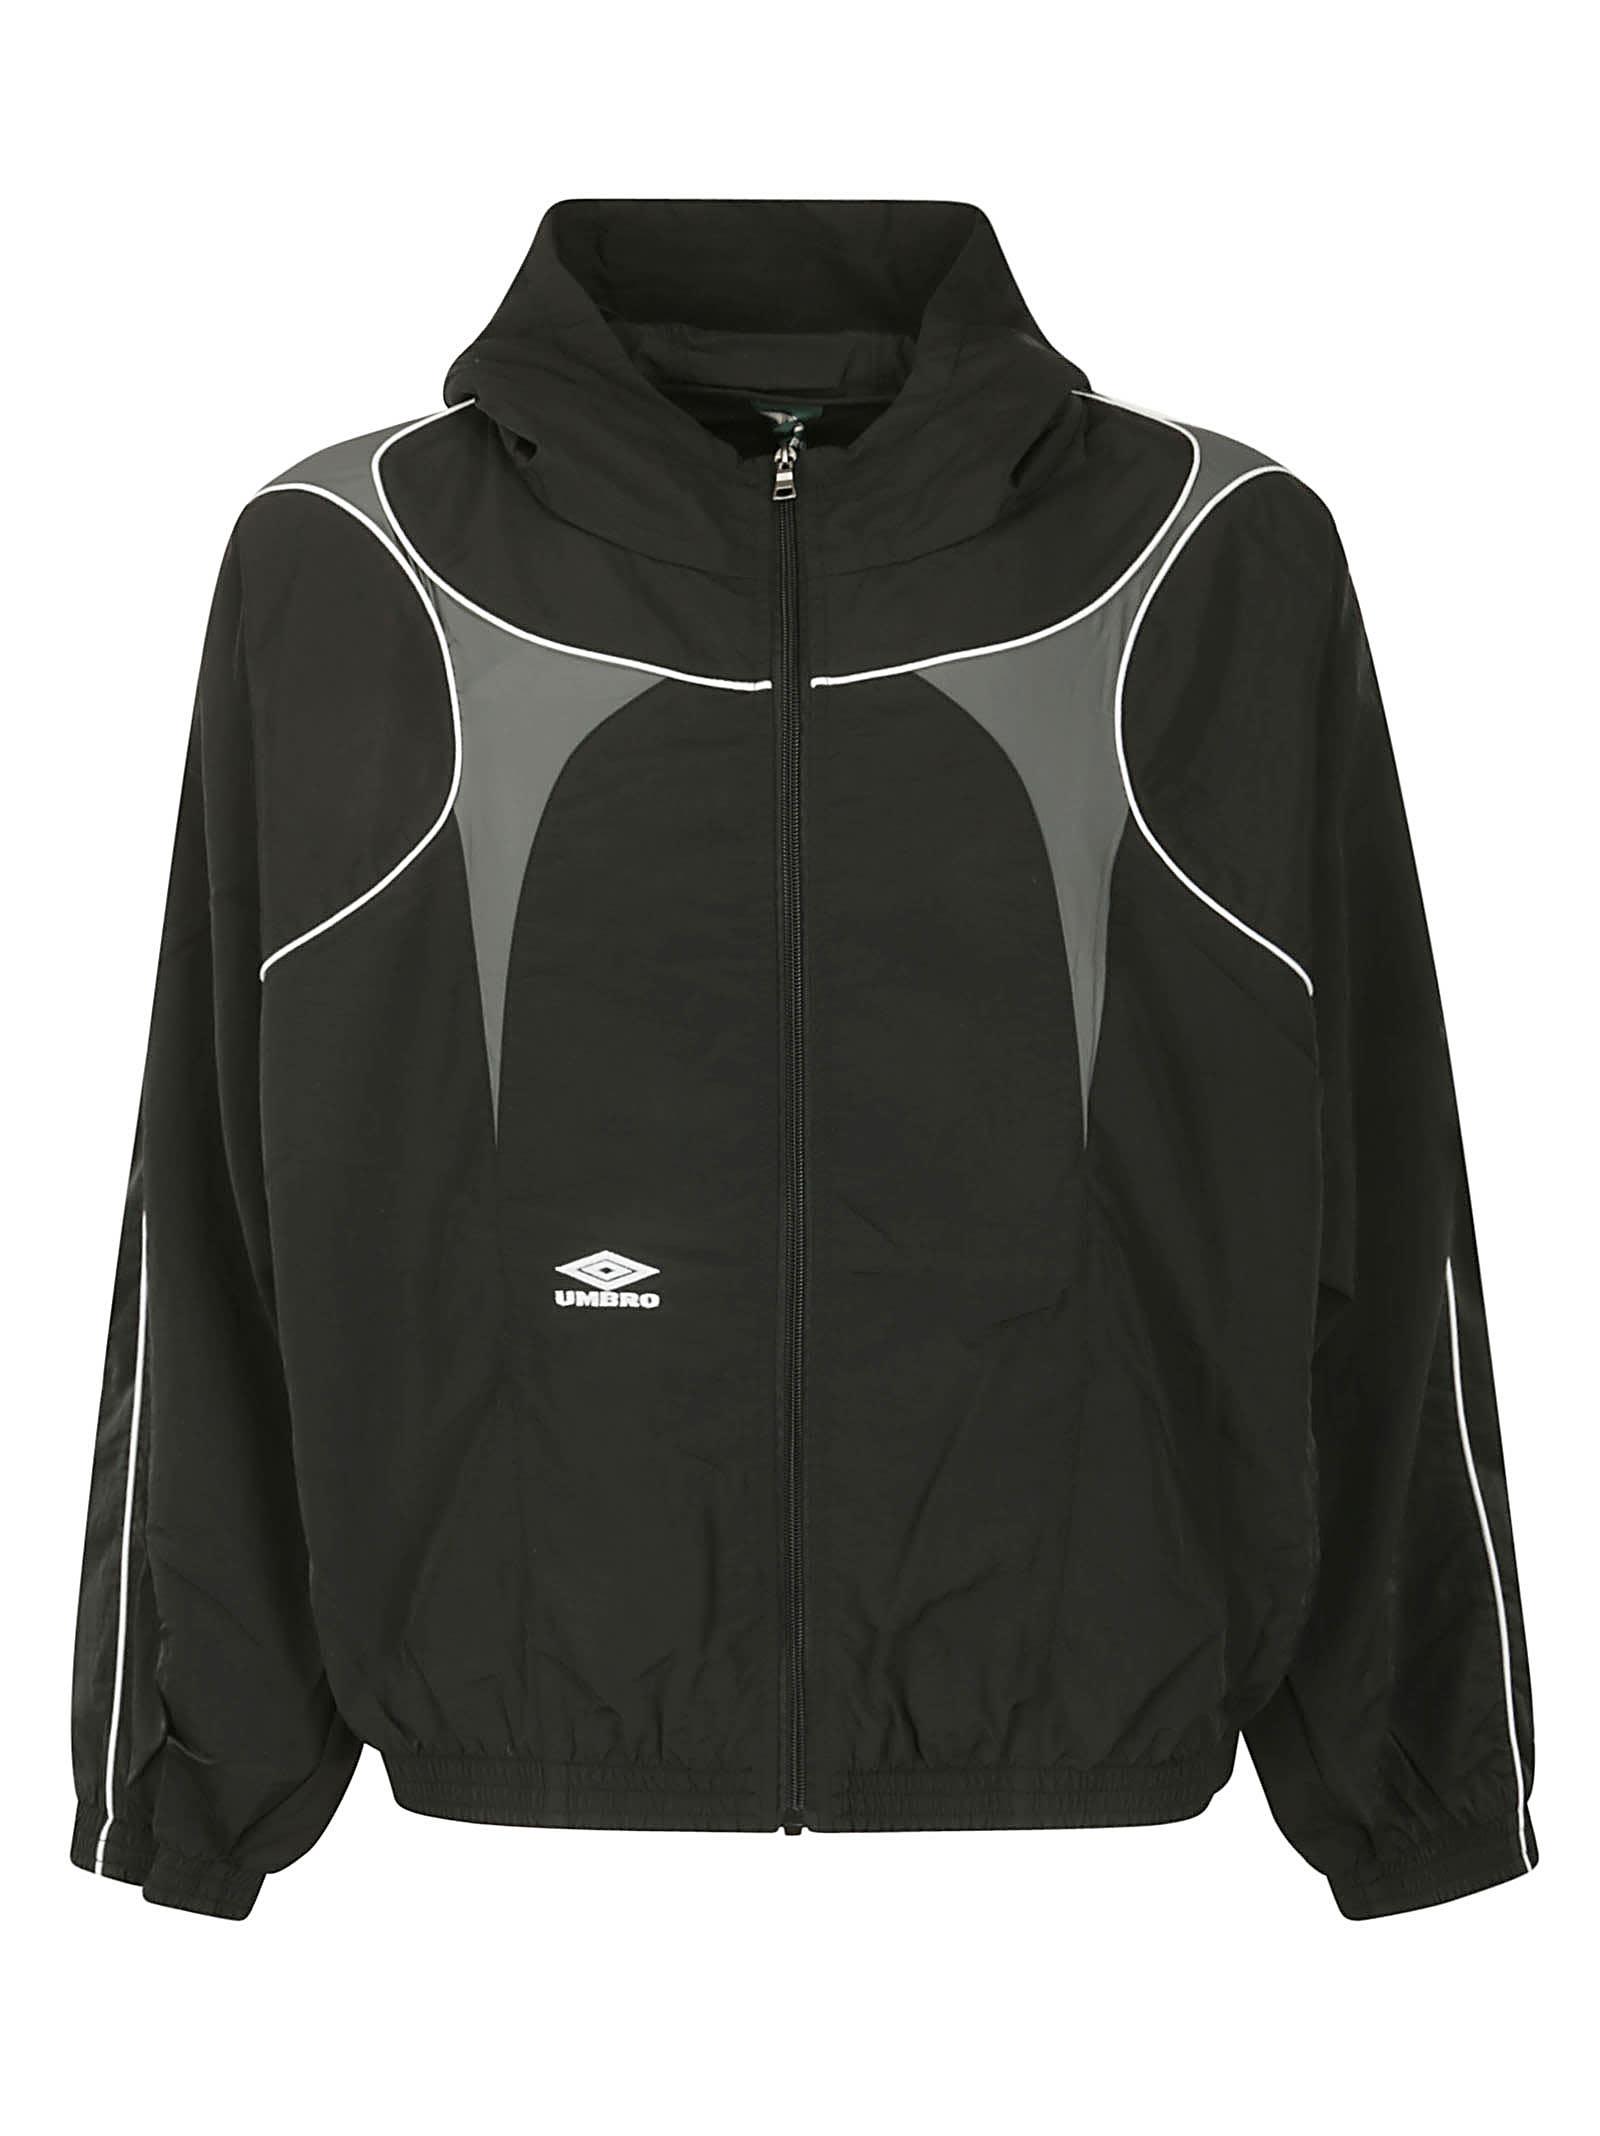 Umbro Advanced Track Jacket in Black for Men